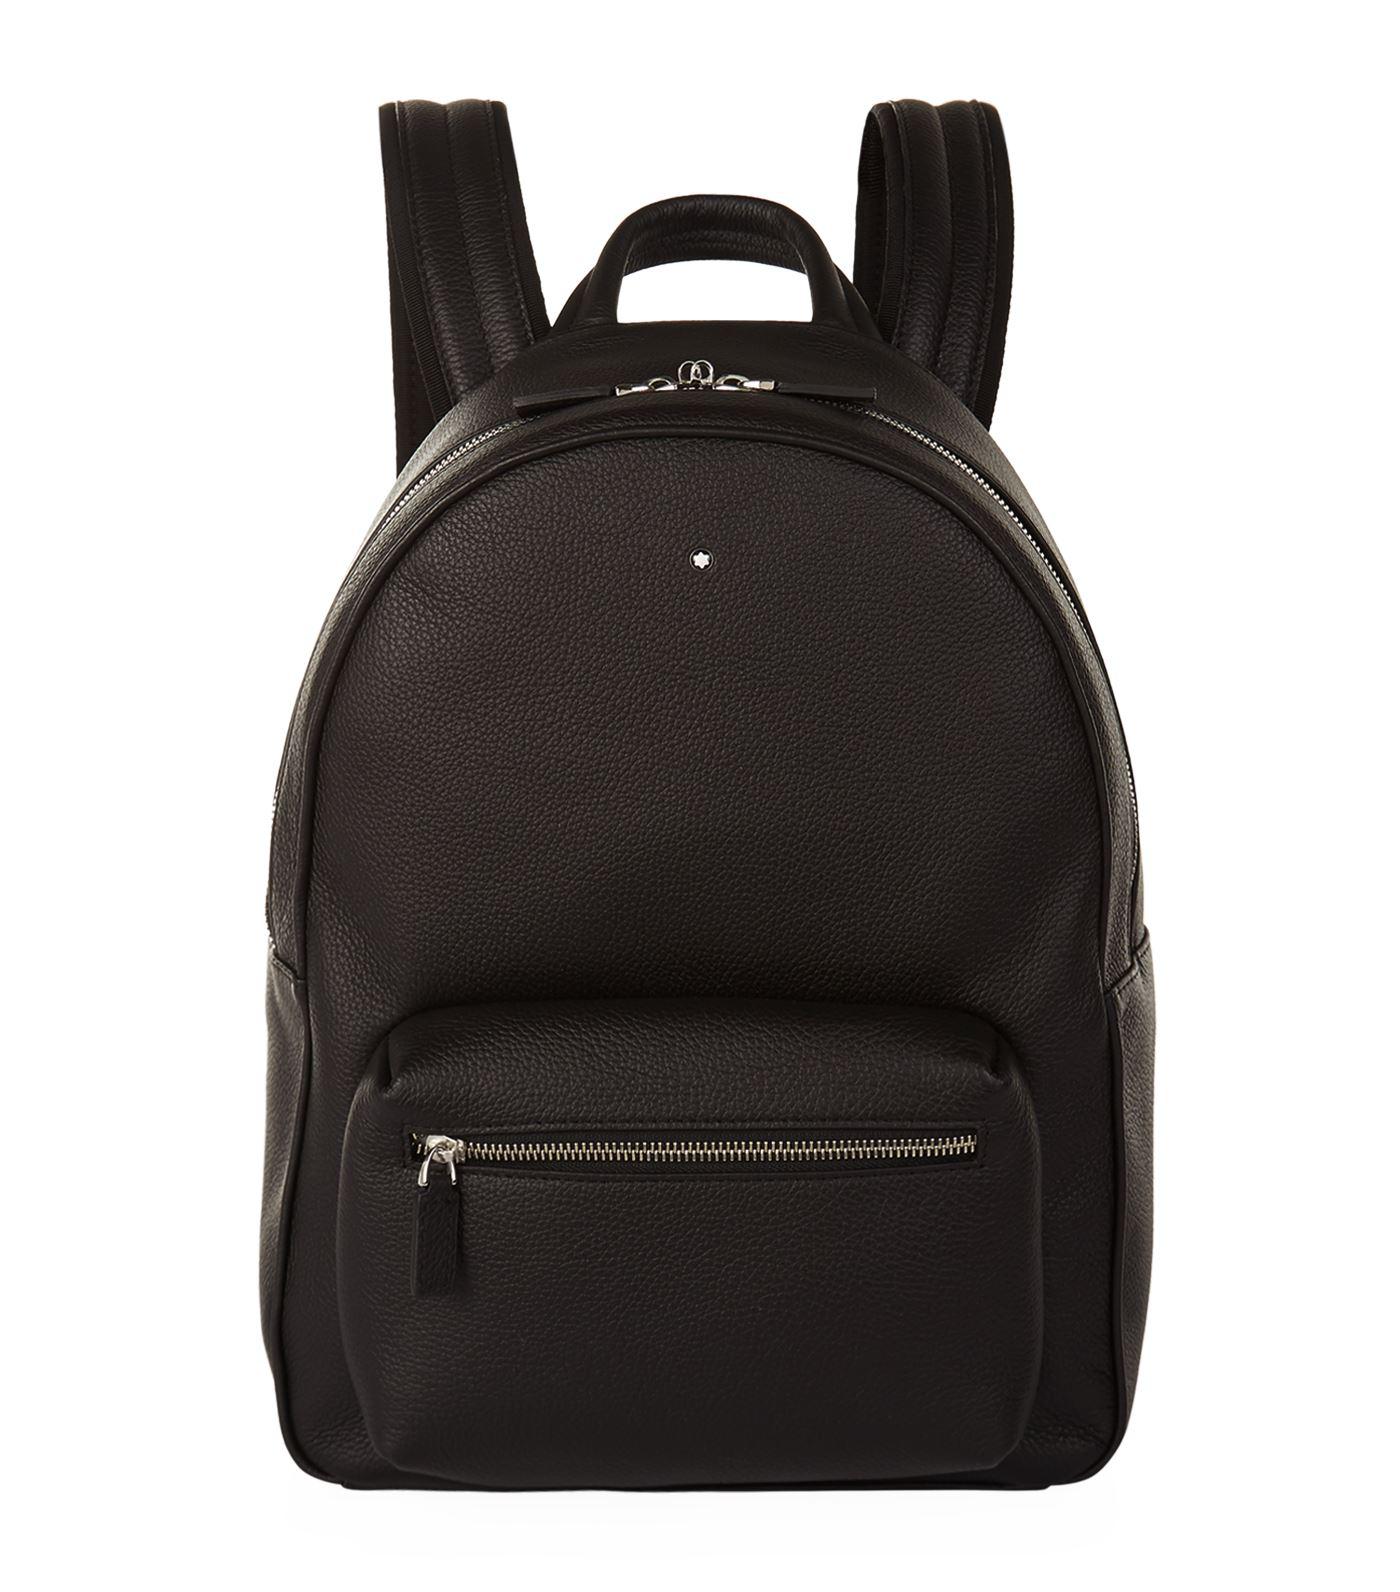 Montblanc Meisterstck Leather Backpack in Black for Men - Lyst